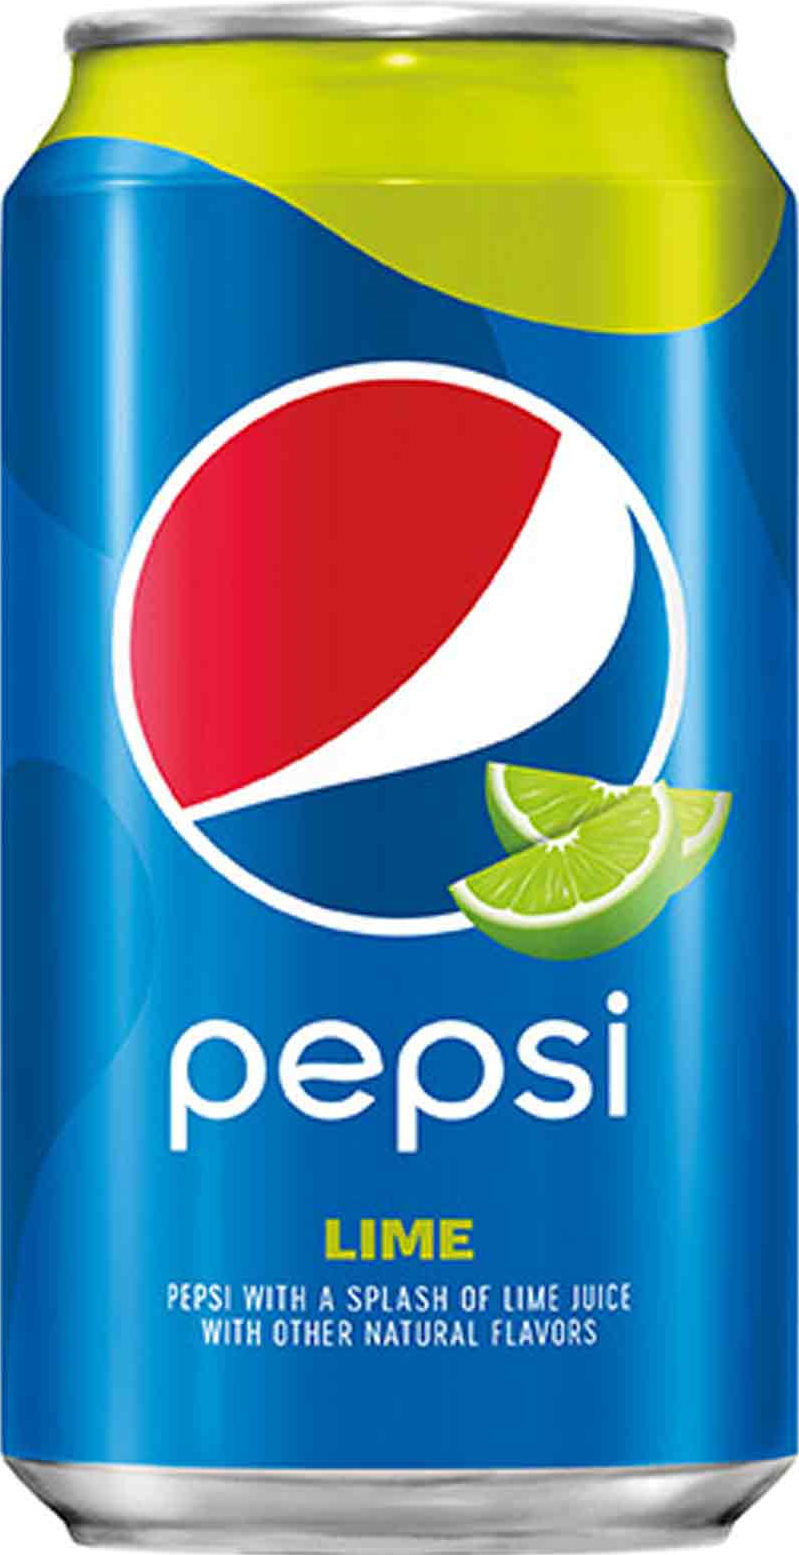 Pepsi Lime | The Soda Wiki | Fandom